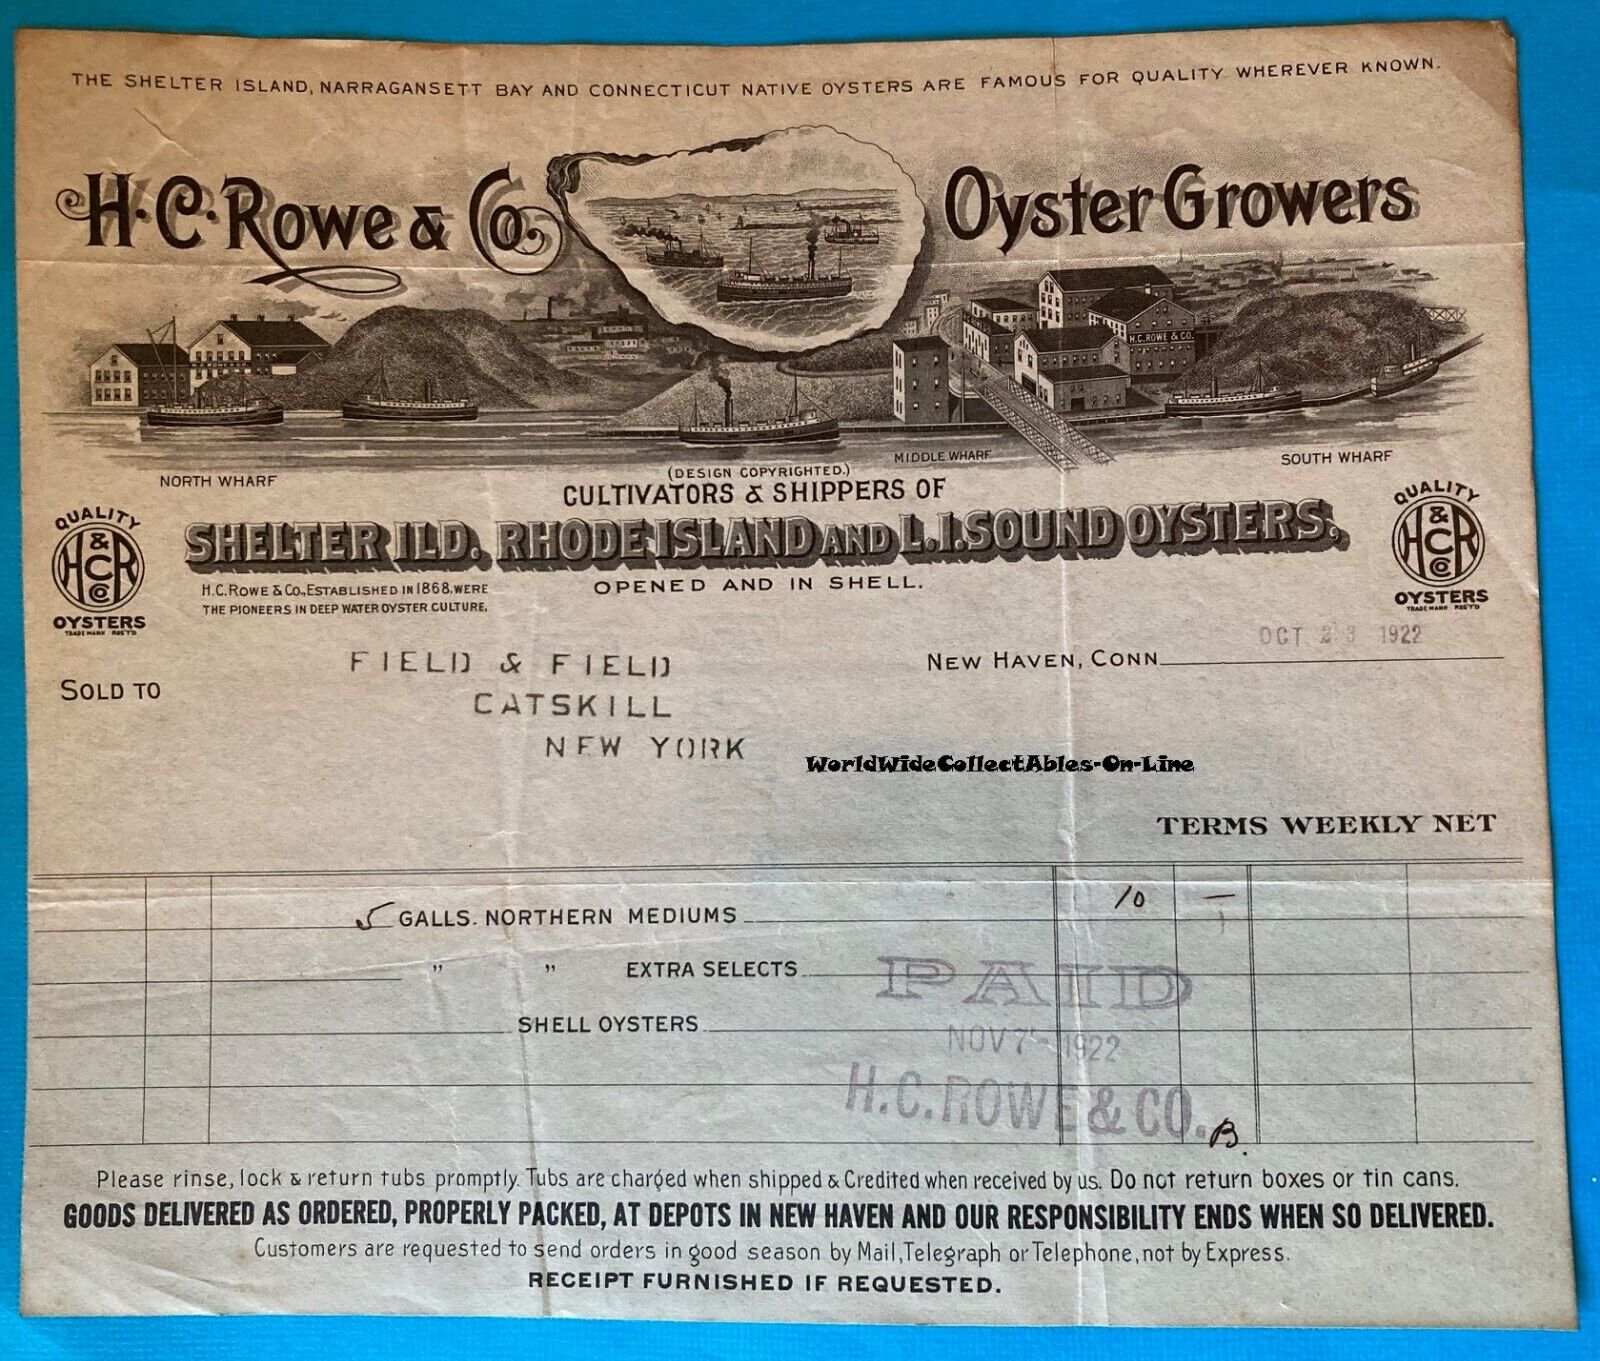 Oct 1922 H.C. Rowe & Co. Oyster Growers Billhead LI Sound Oysters Field Catskill